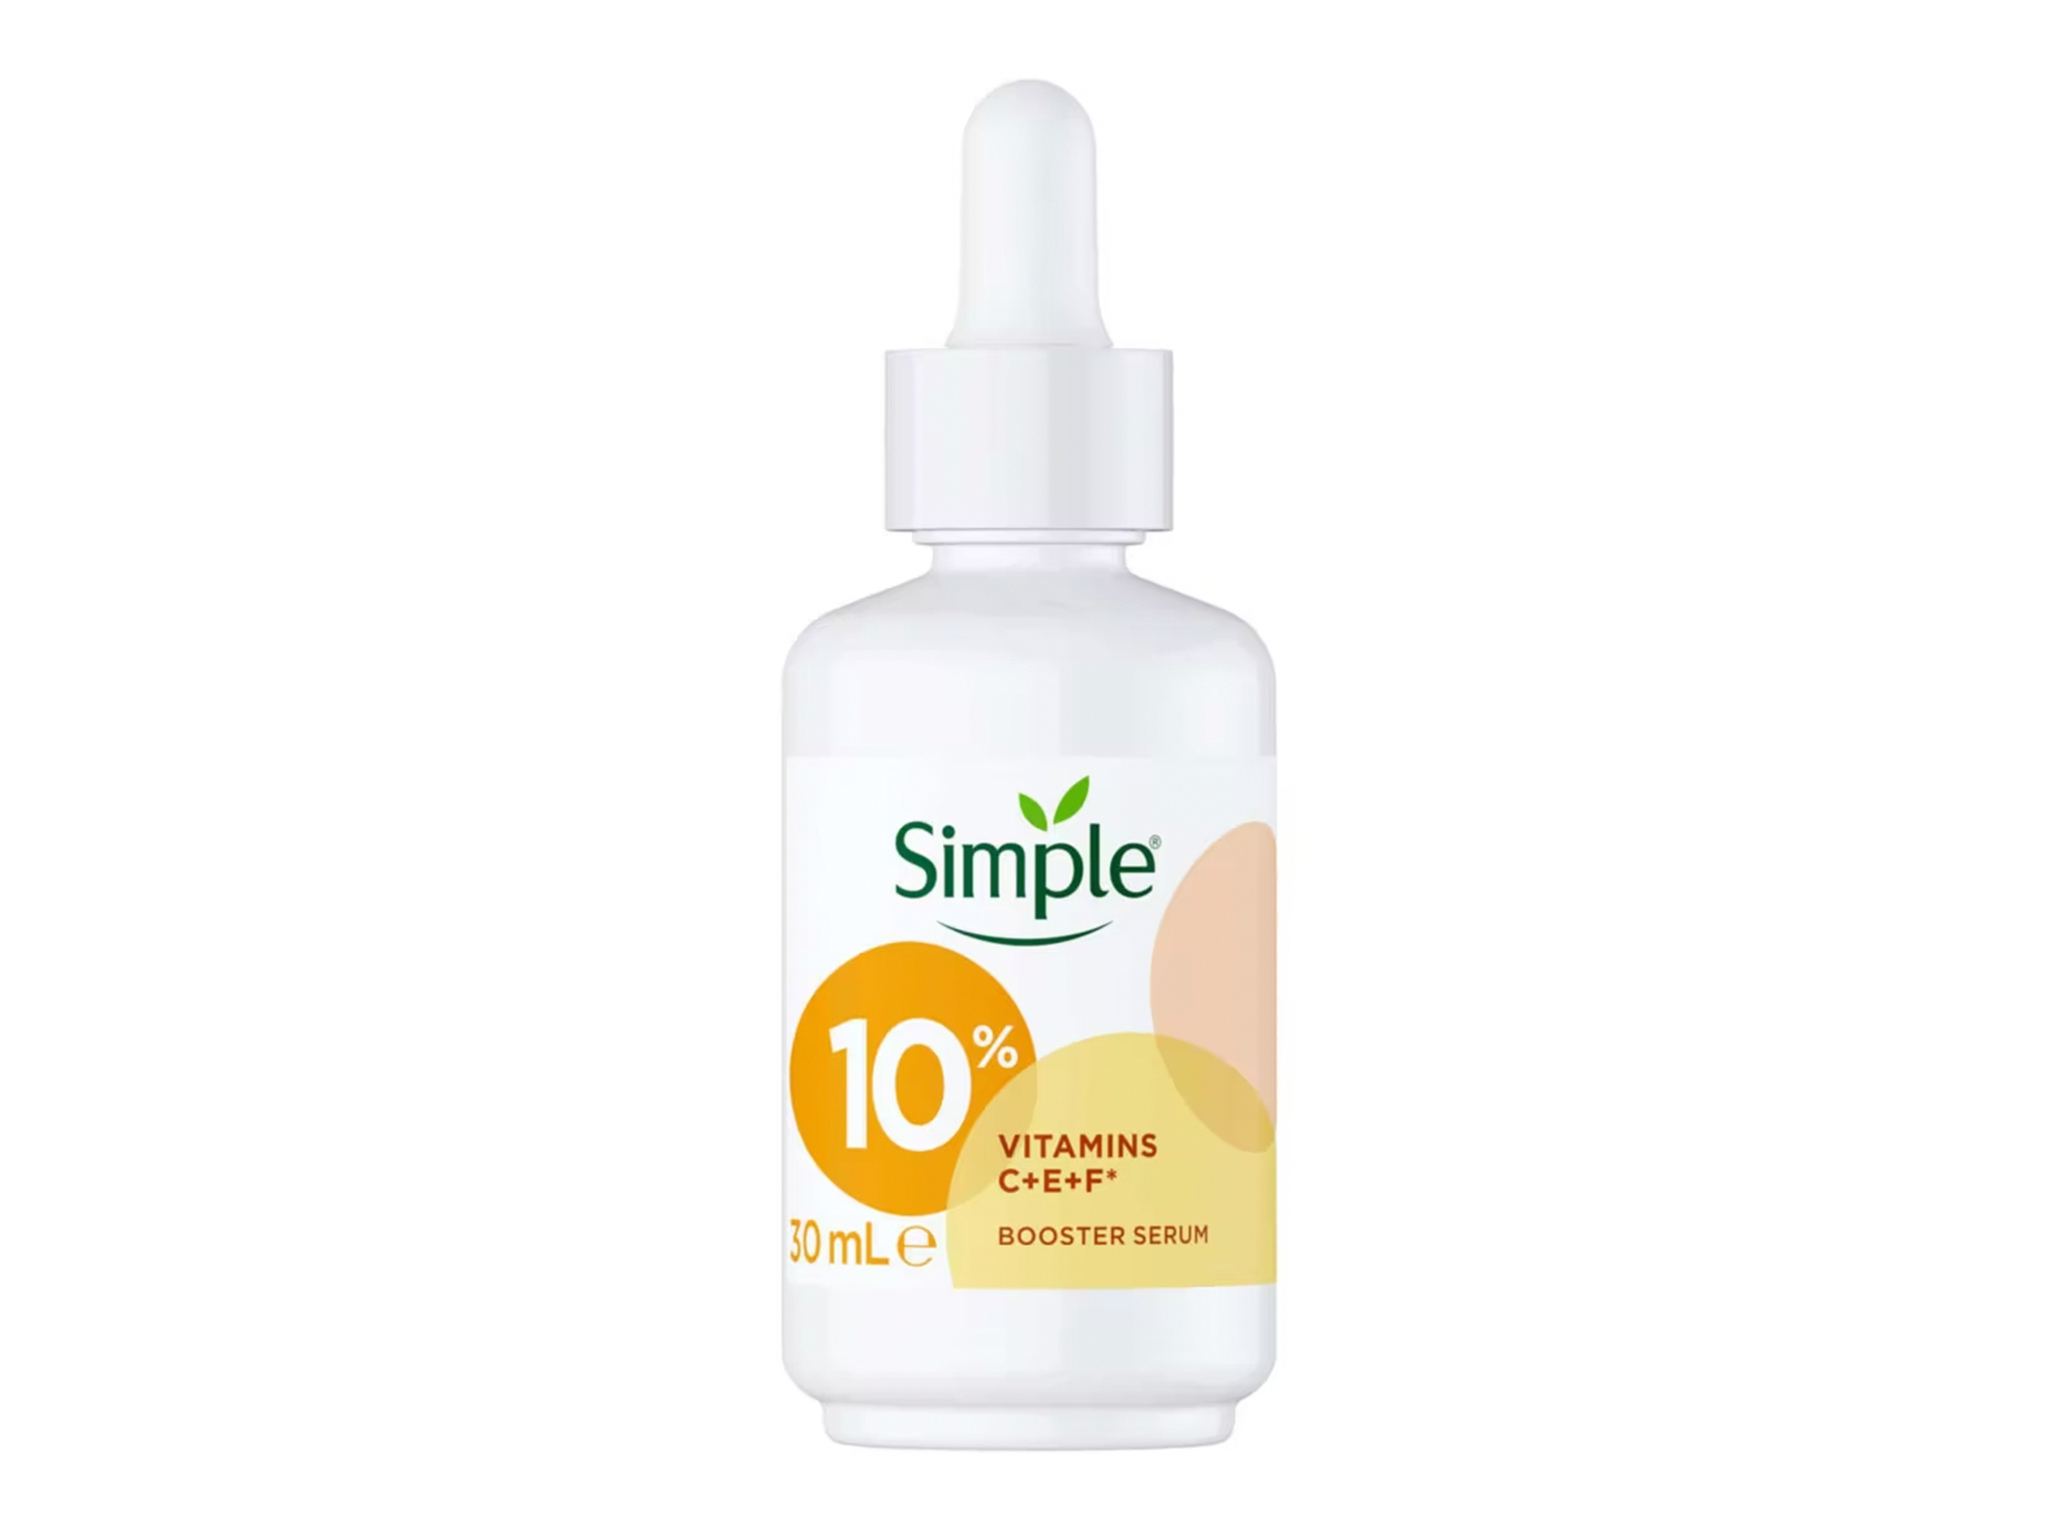 best vitamin d serum indybest review Simple booster serum 10% vitamin C+E+F